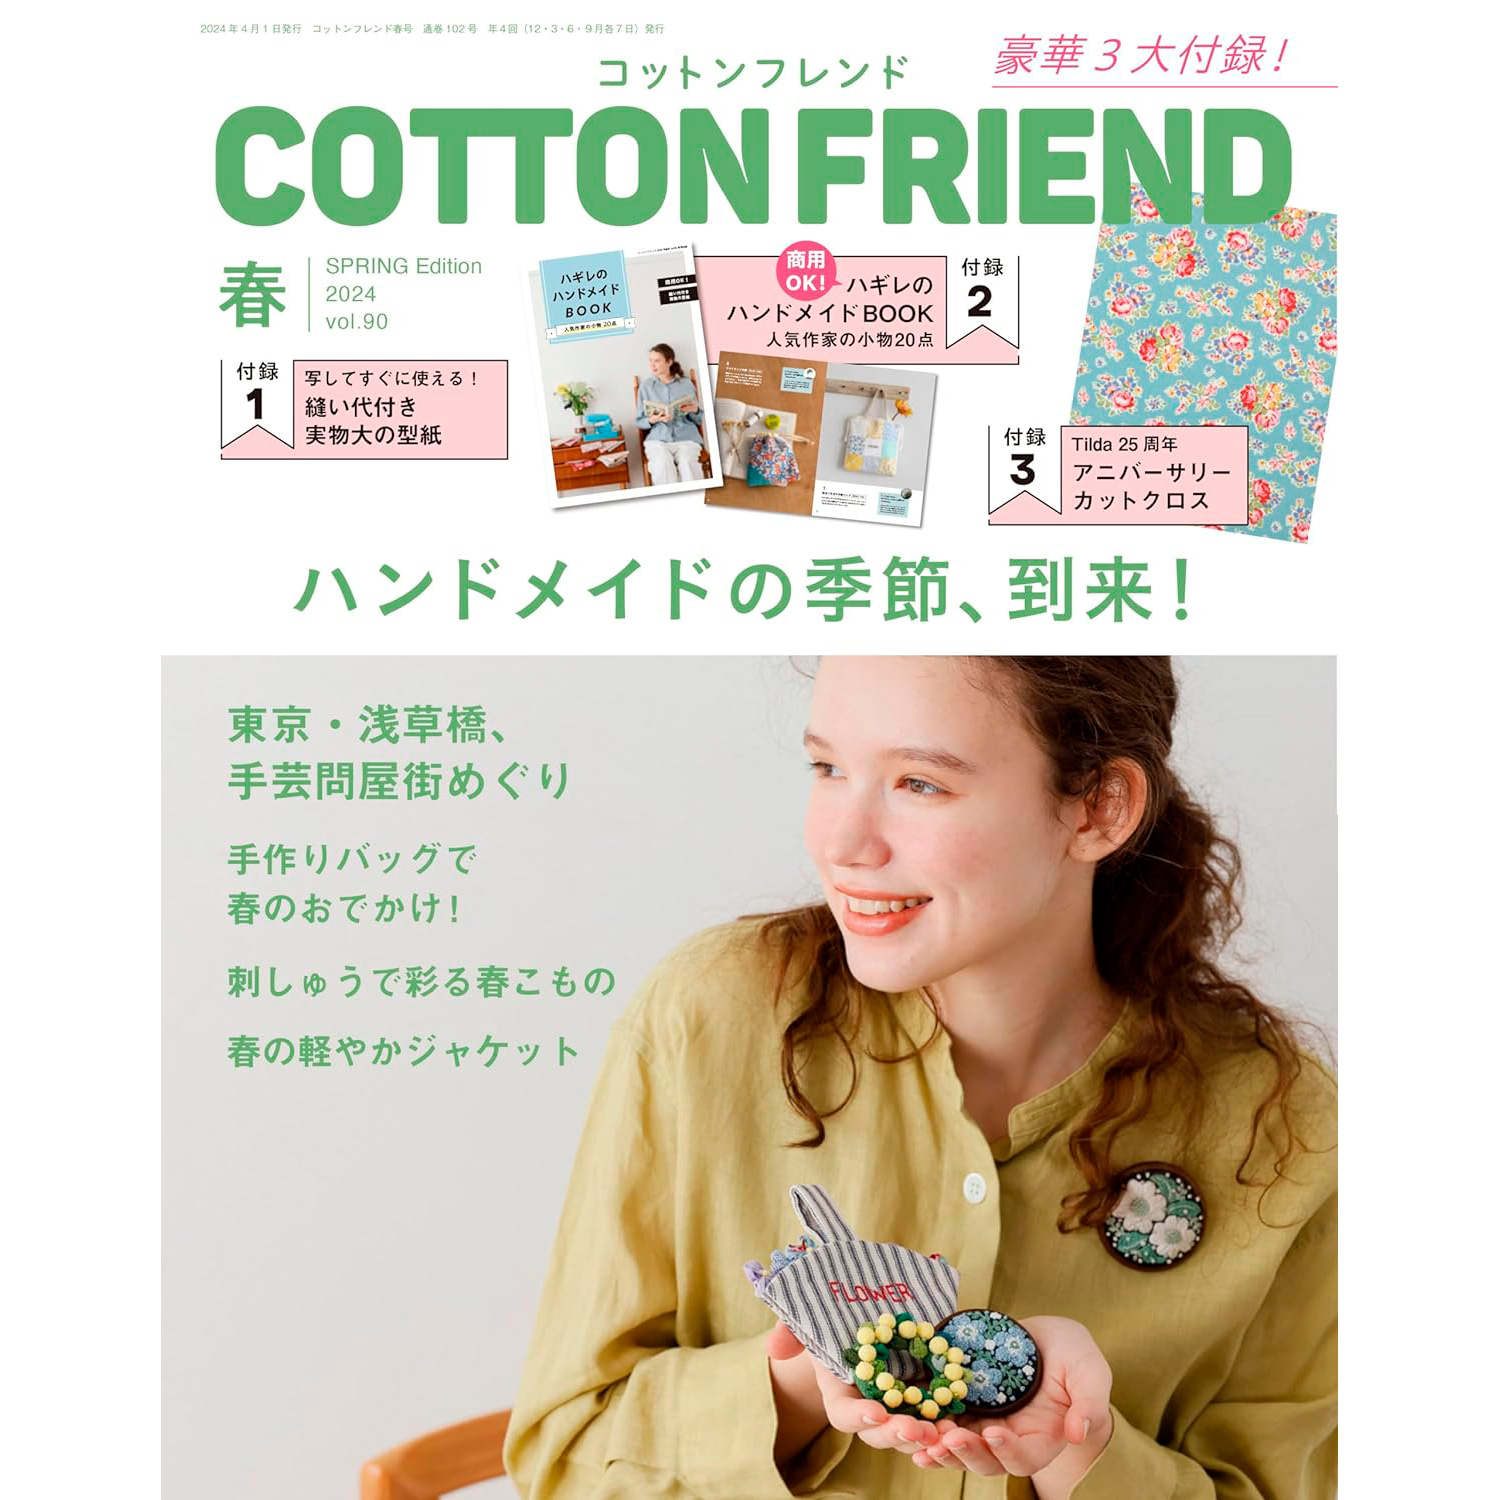 BTQ25044 COTTON FRIEND Spring Edition 2024 vol.90 (book)